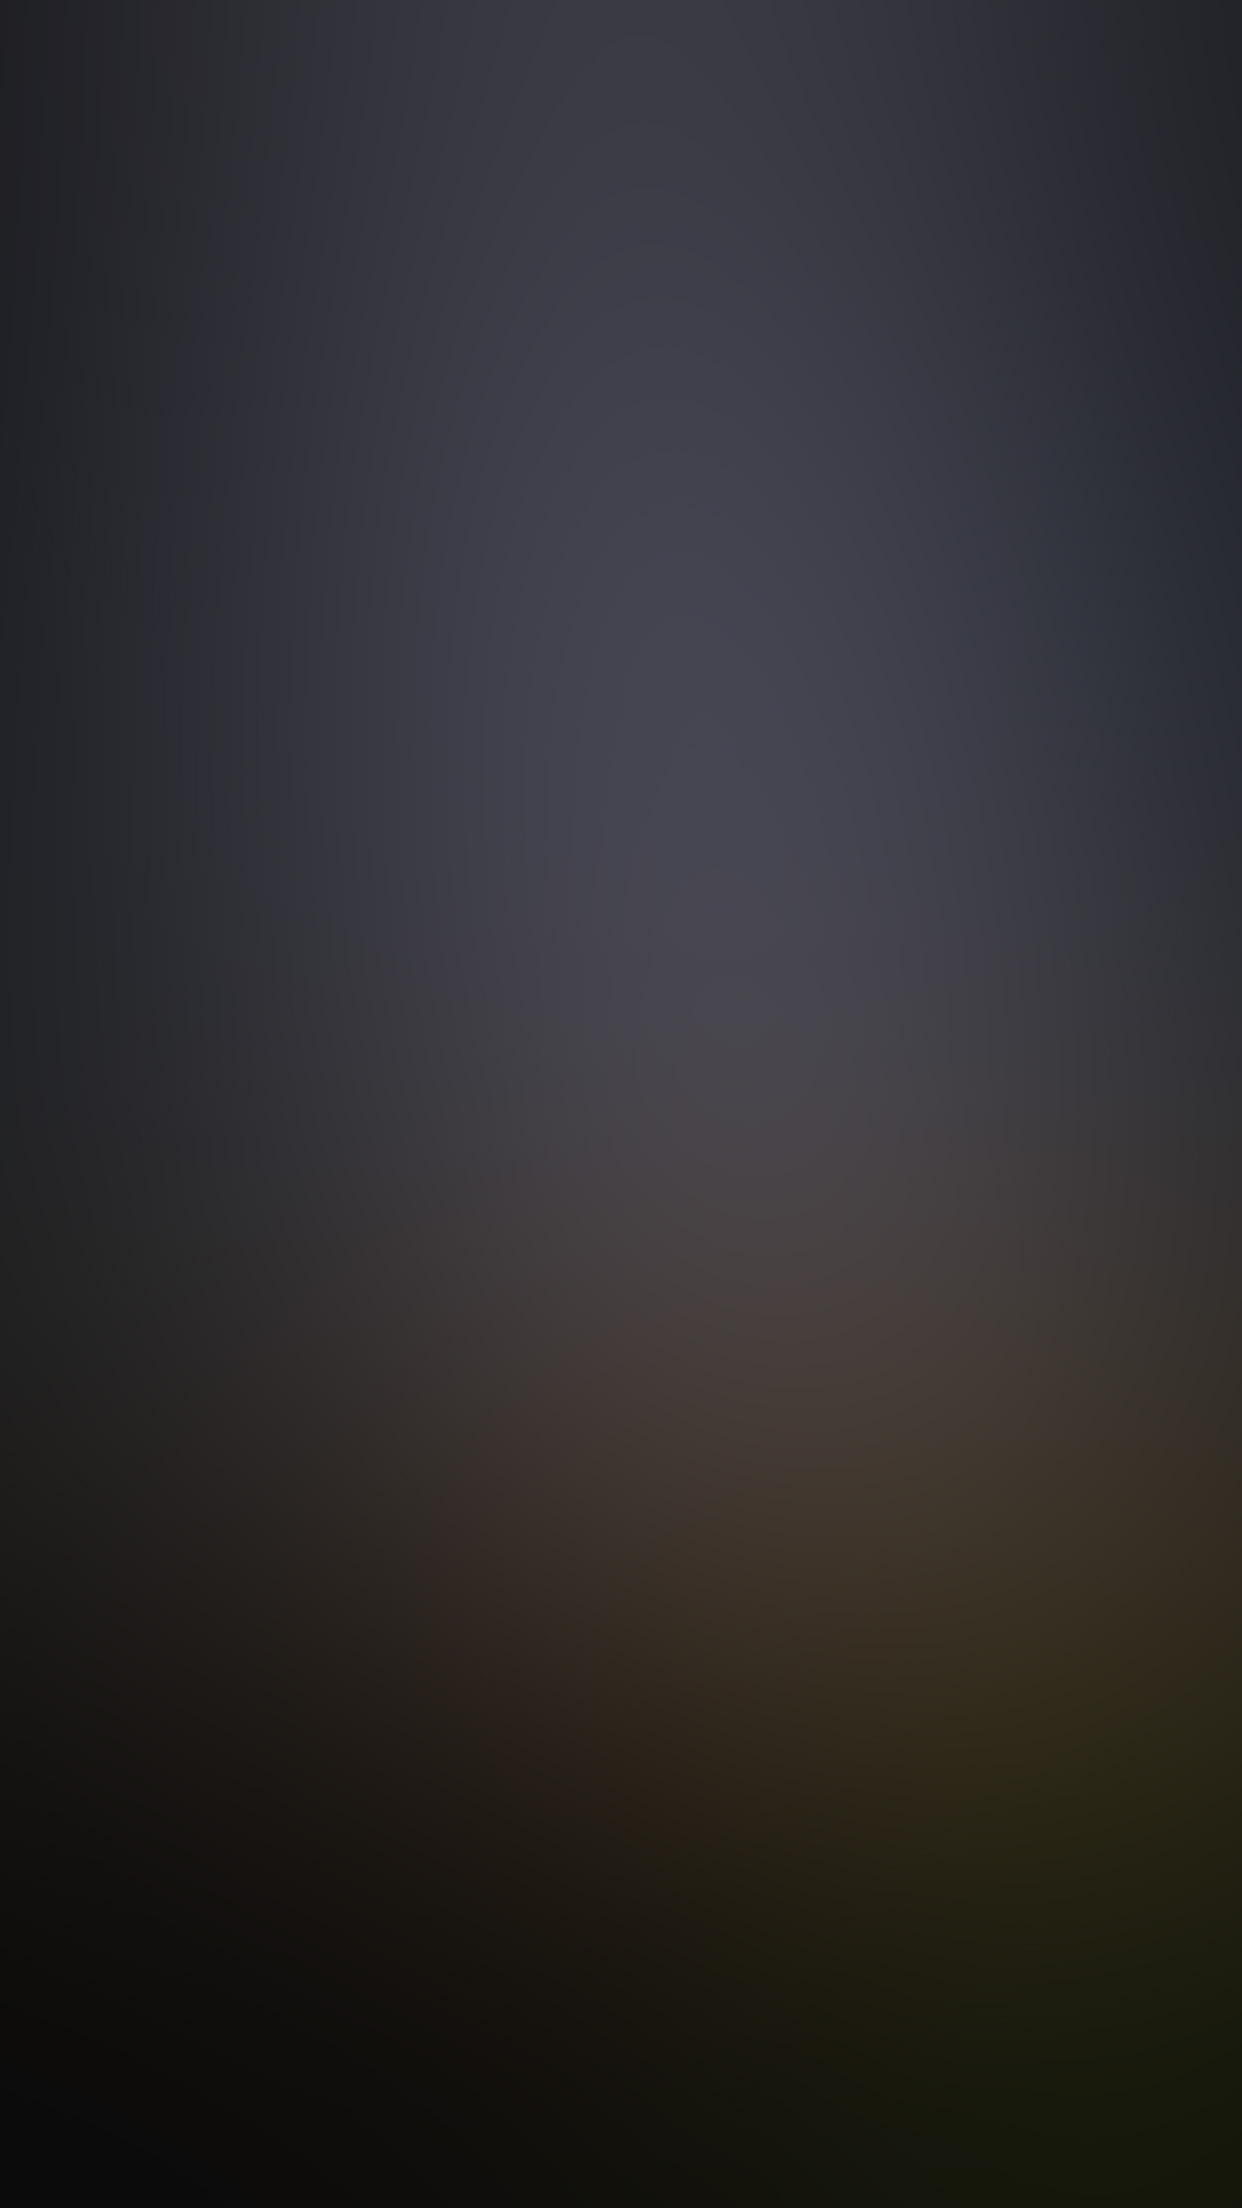 iPhone6papers.co. iPhone 6 wallpaper. dark sunlight calm gradation blur